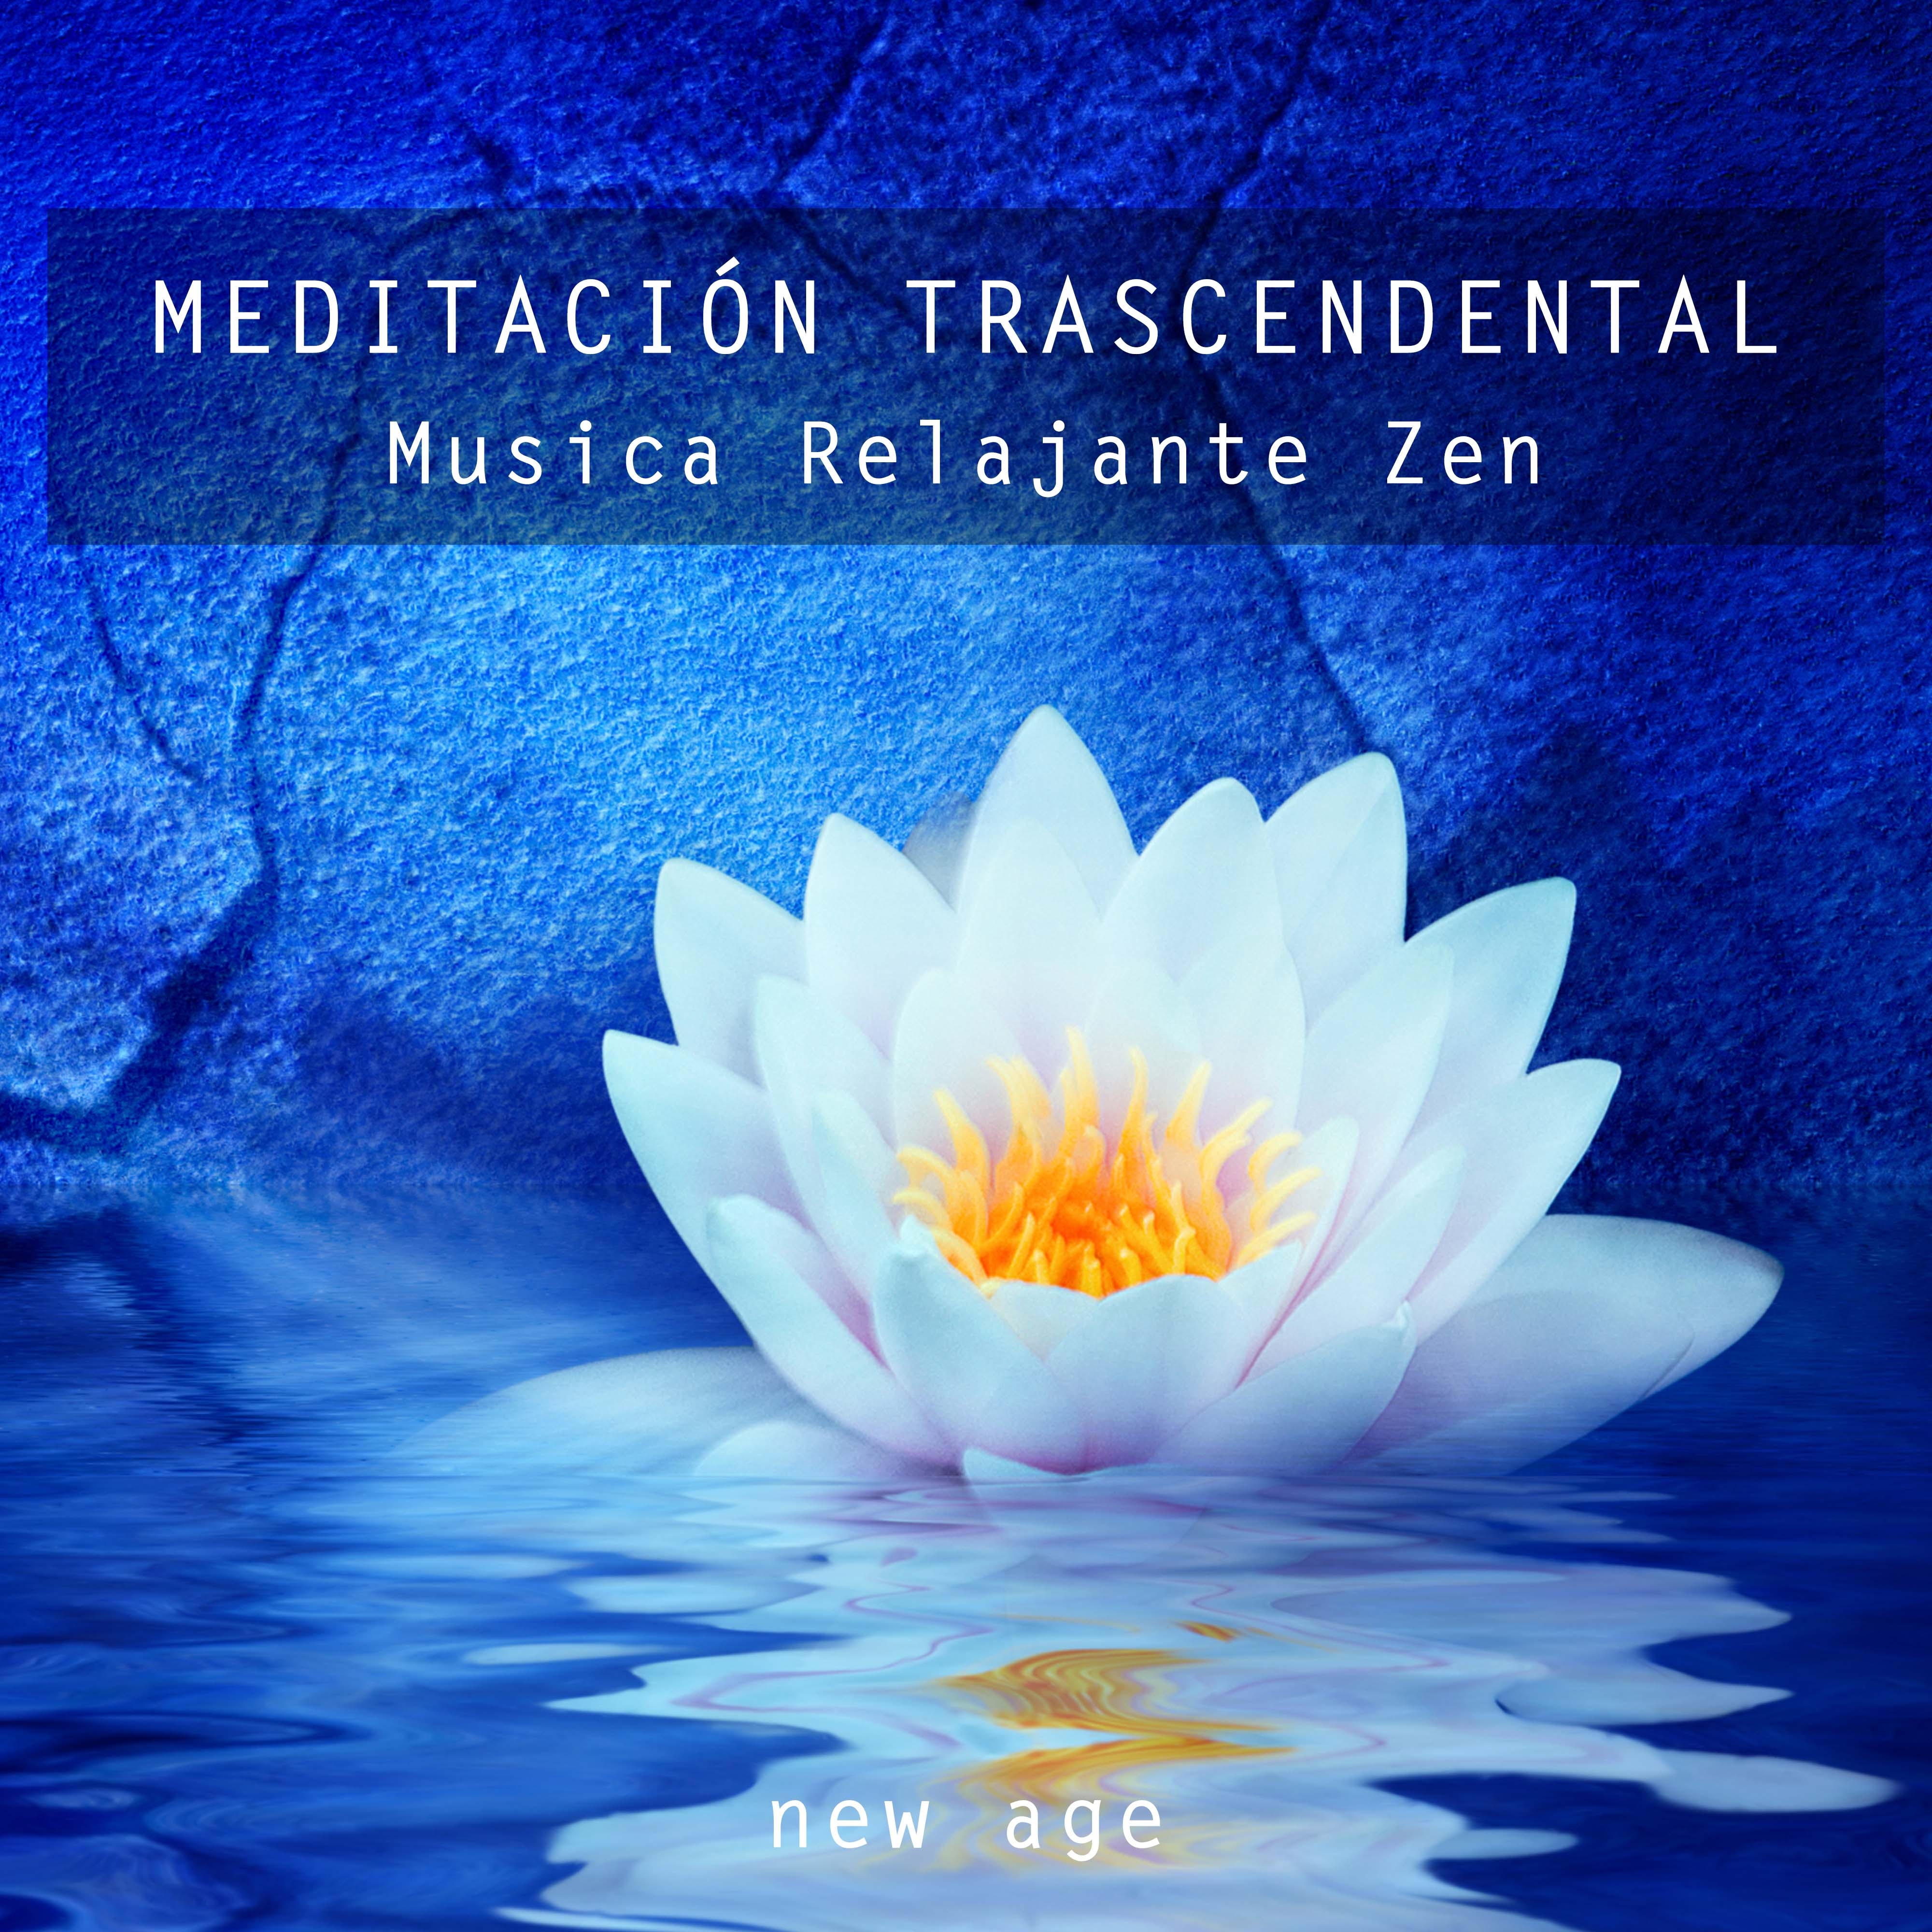 Meditación Trascendental - Musica Relajante Zen